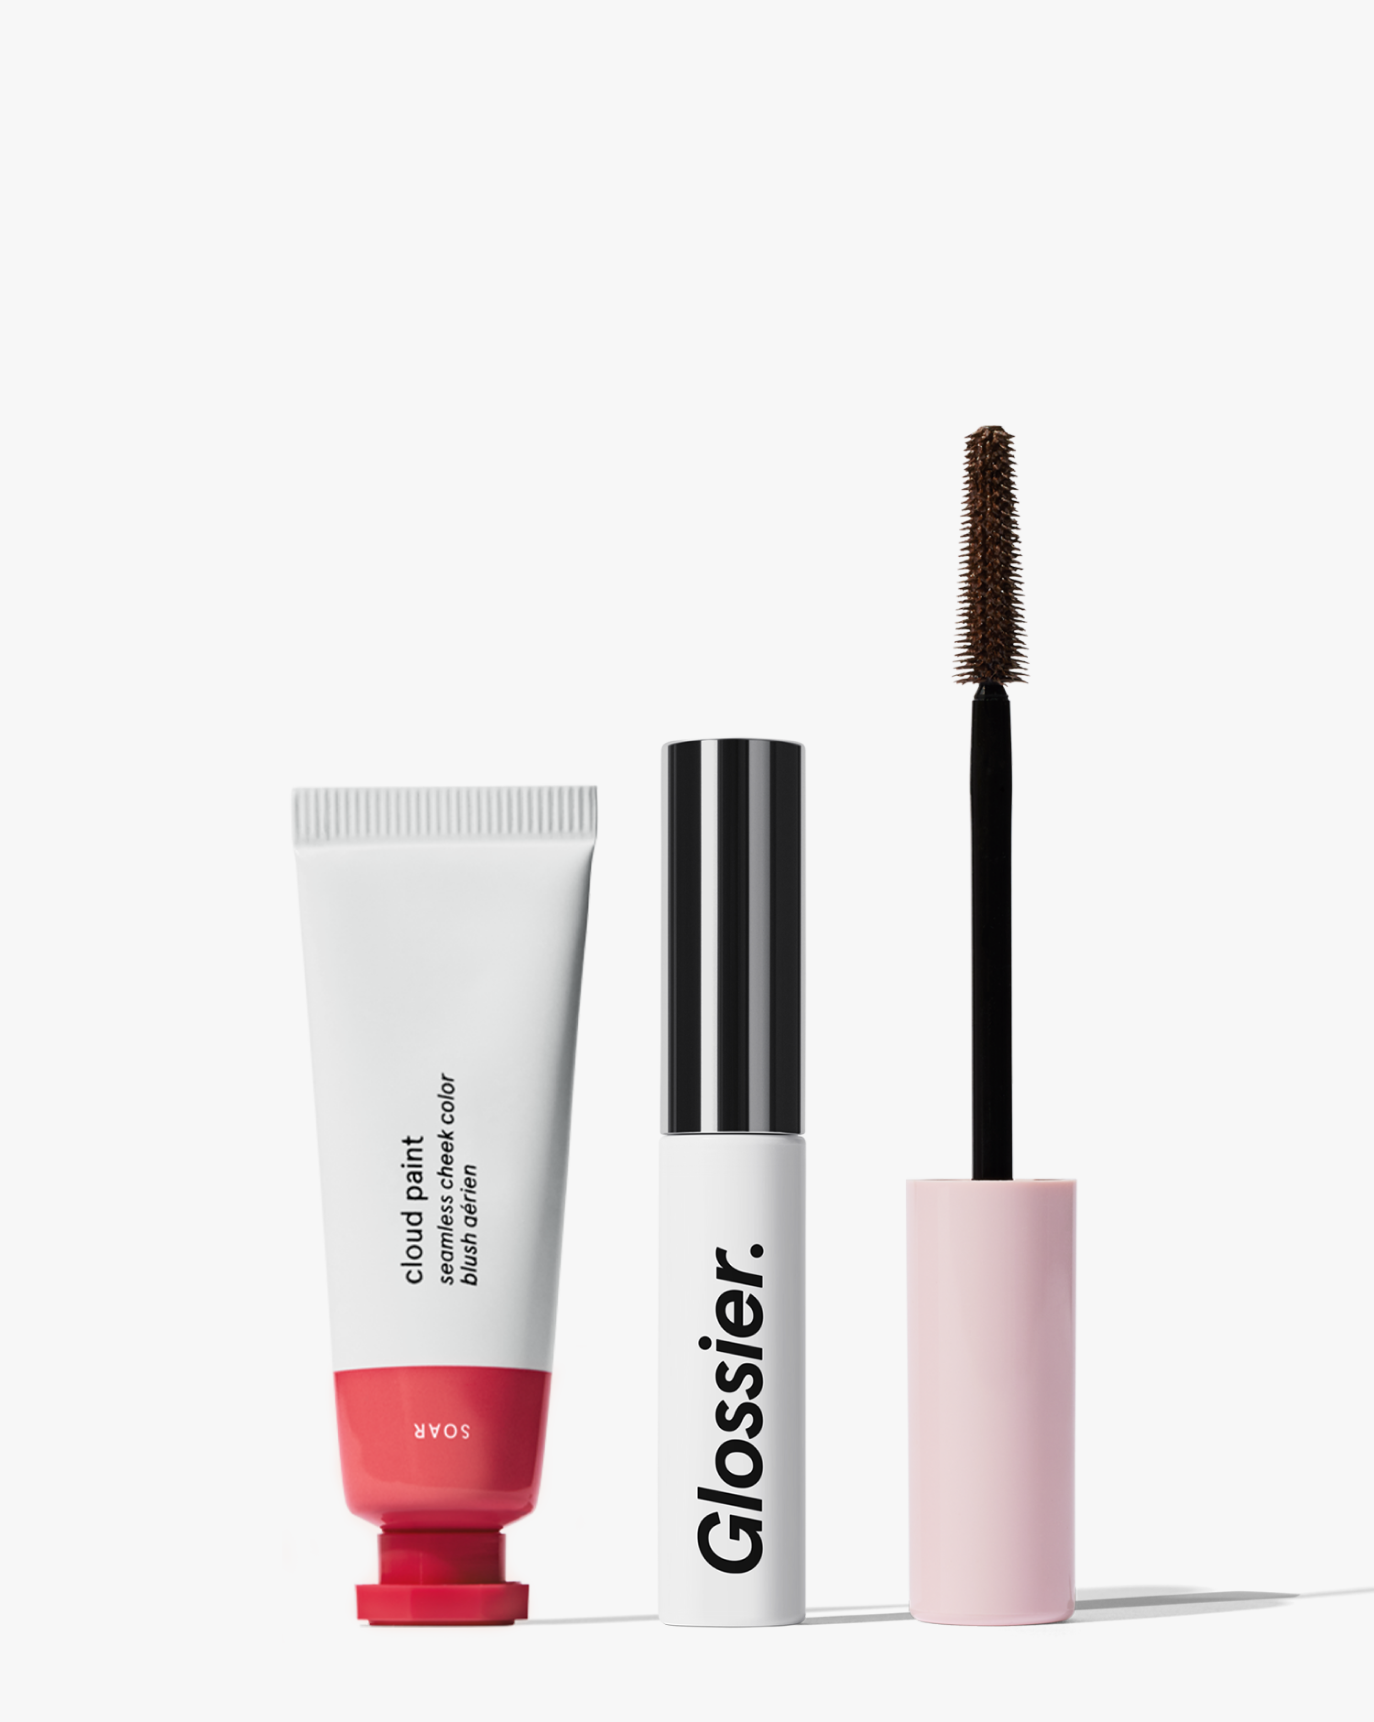 Glossier The Makeup Set, Lash Slick Mascara, Cloud Paint Gel-Cream Blush, Boy Brow Pomade | Everyday Makeup Essentials | Fragrance-Free